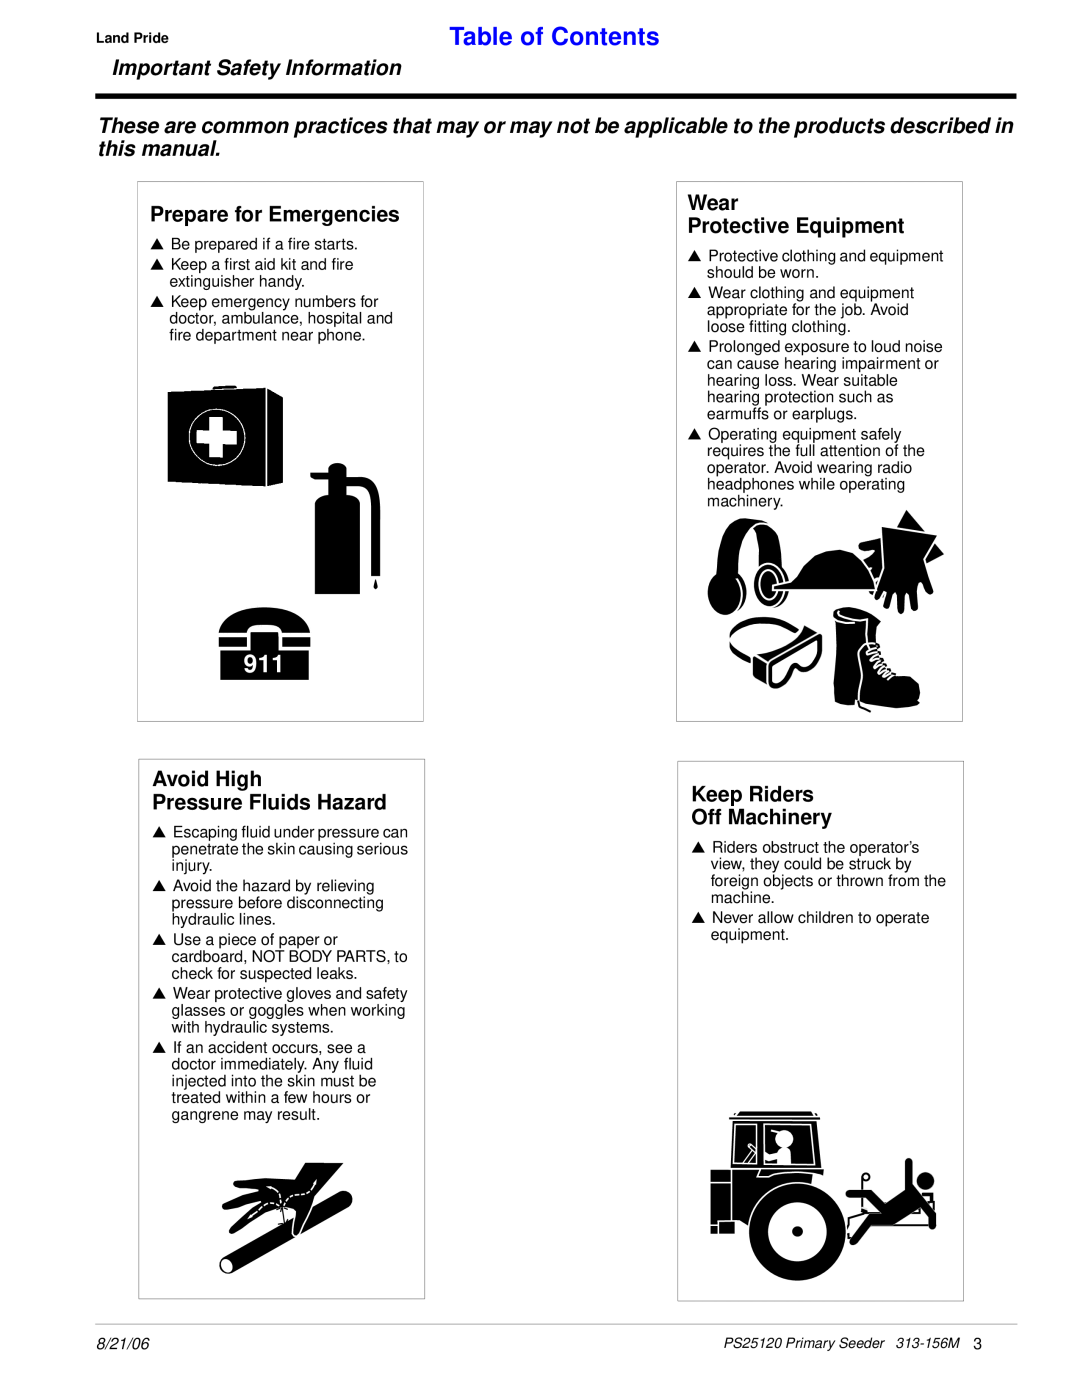 Land Pride PS25120 manual Prepare for Emergencies, Wear Protective Equipment, Avoid High Pressure Fluids Hazard 